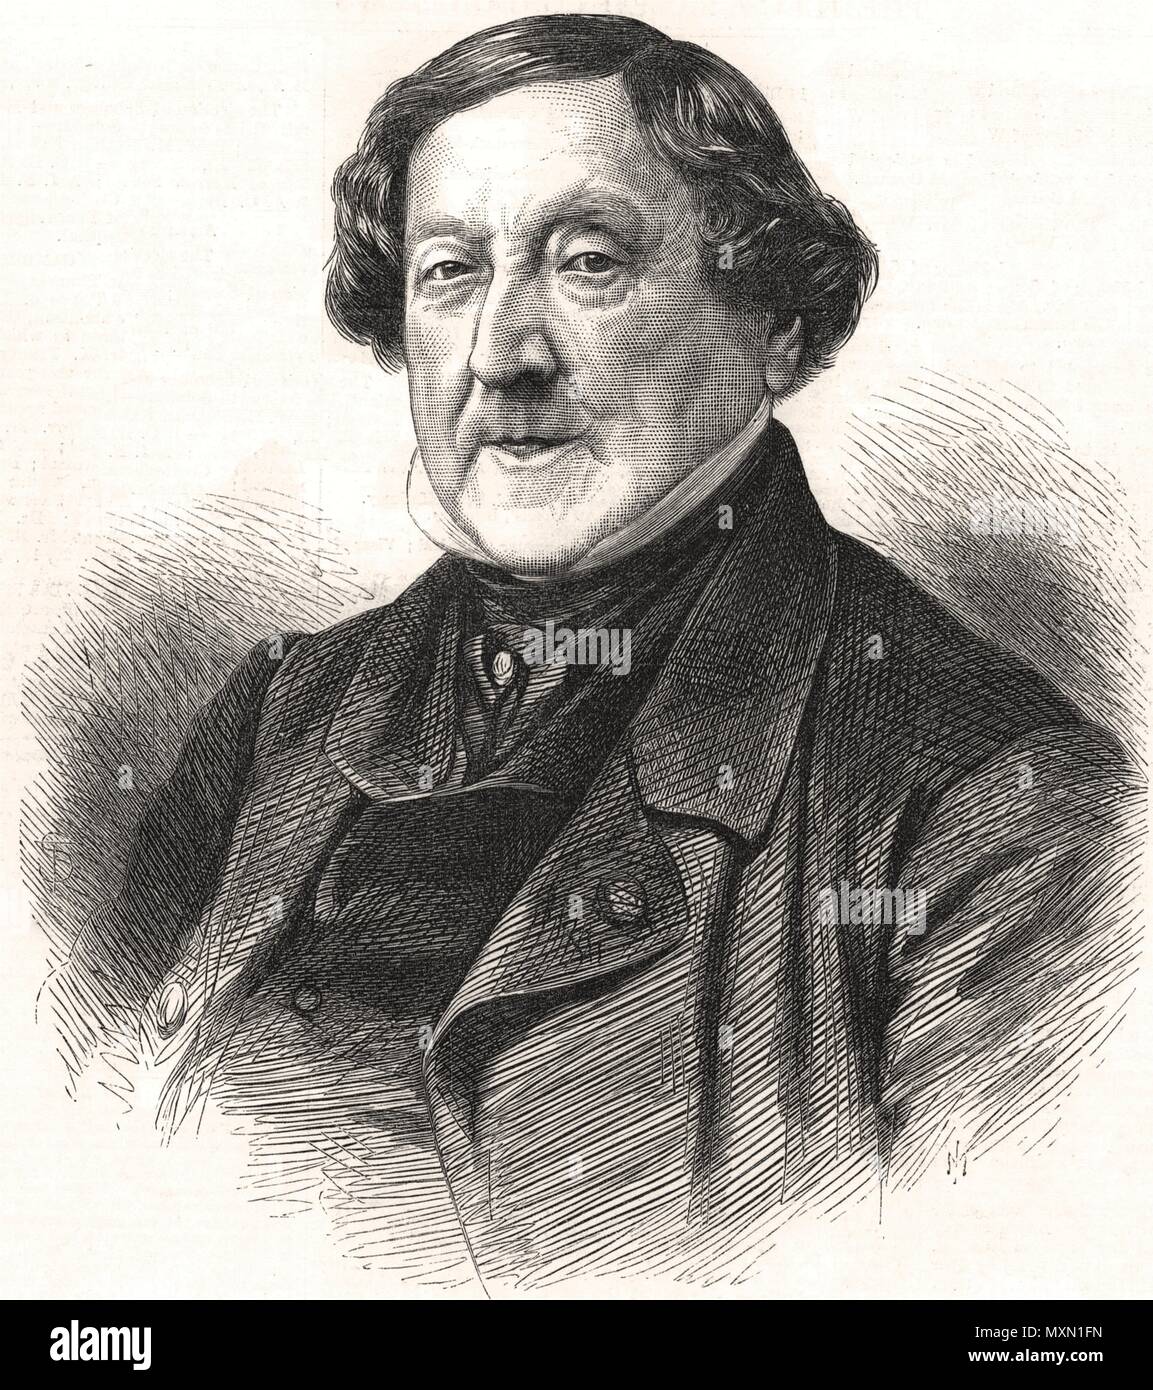 La fin Gioacchino Rossini, le compositeur. Music 1868. L'Illustrated London News Banque D'Images